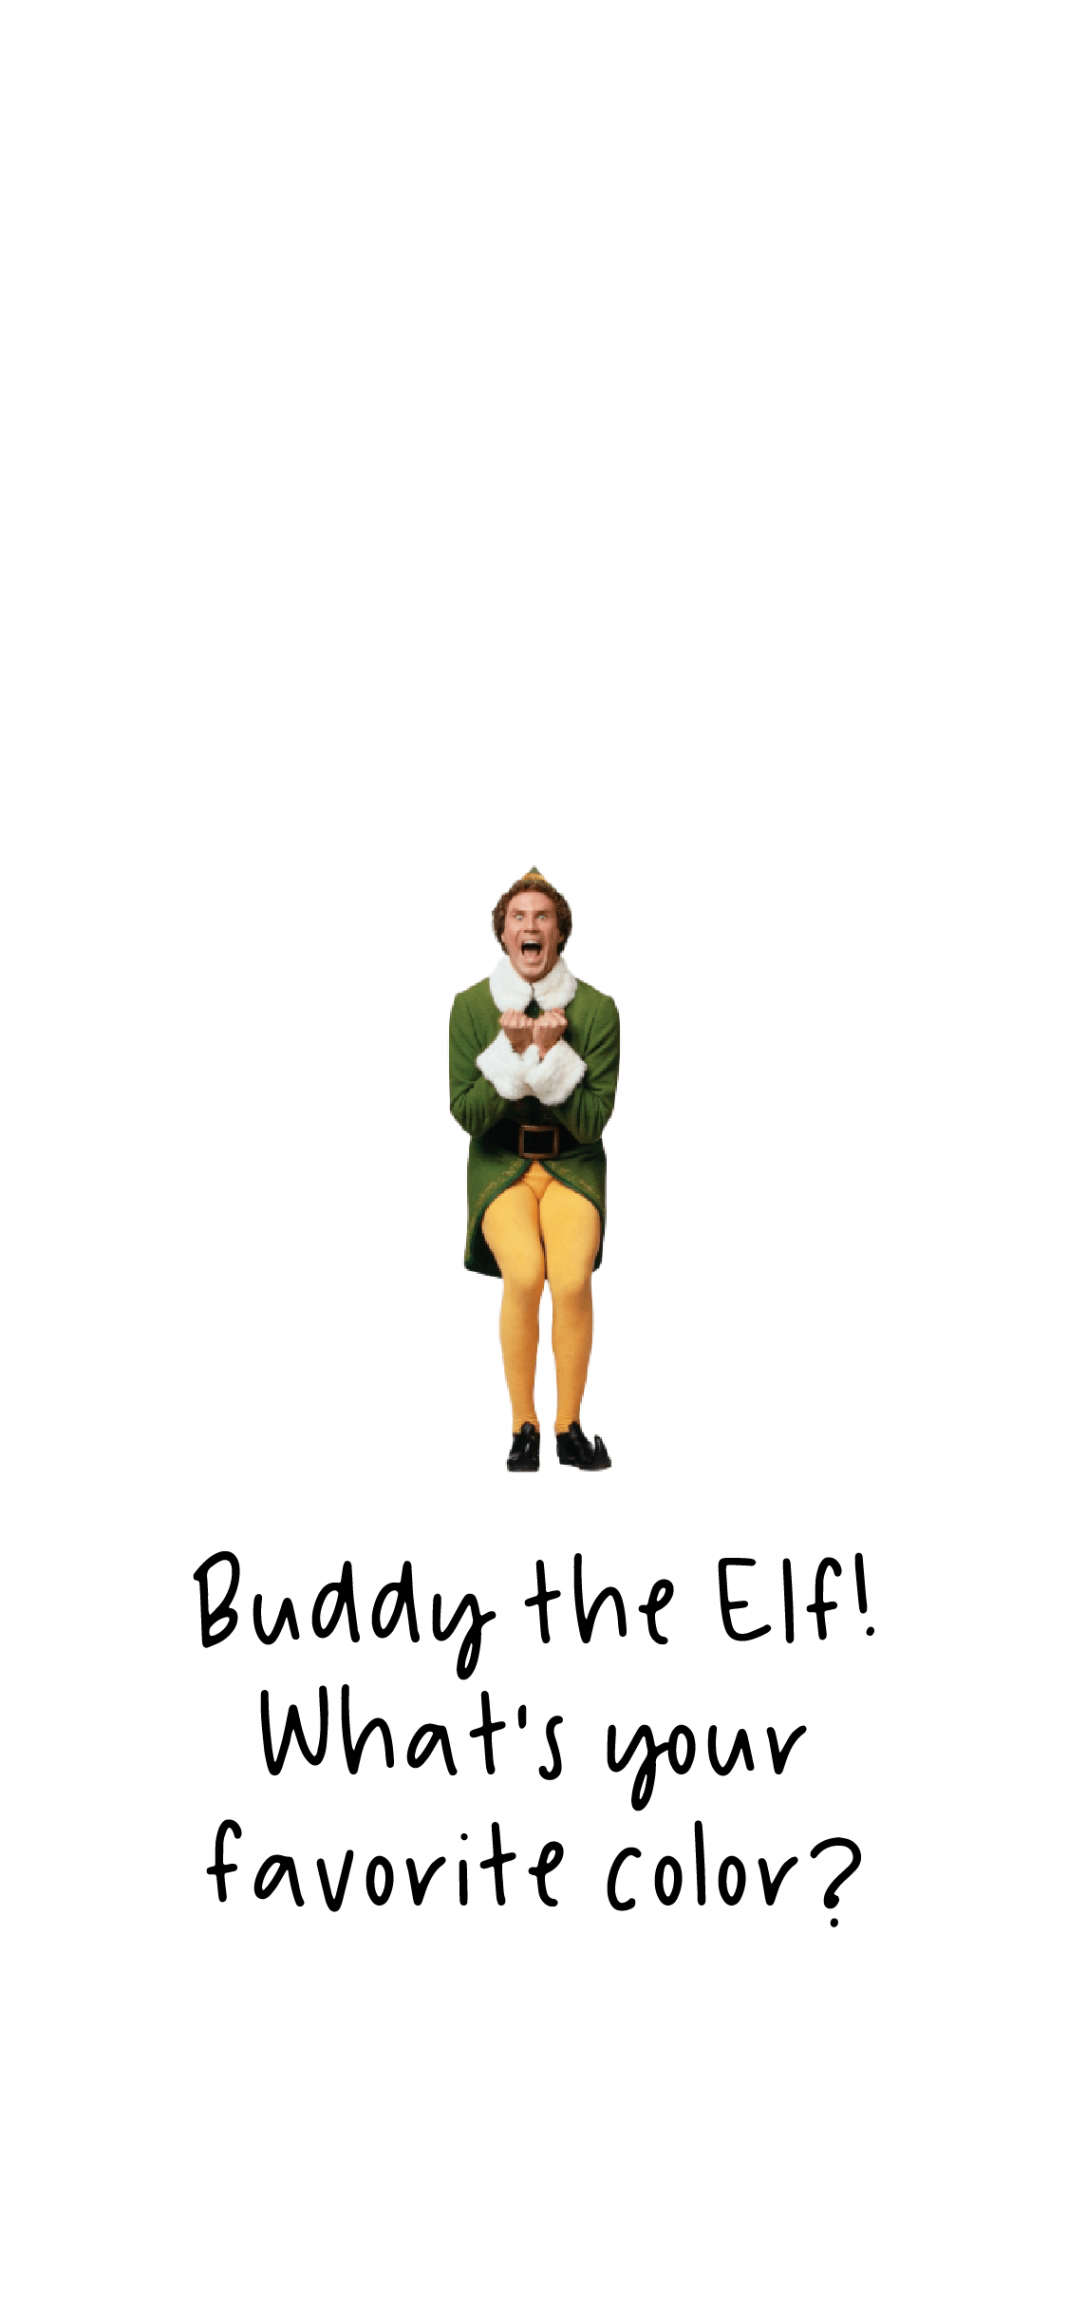 Buddy the Elf iPhone Wallpaper  Christmas phone wallpaper